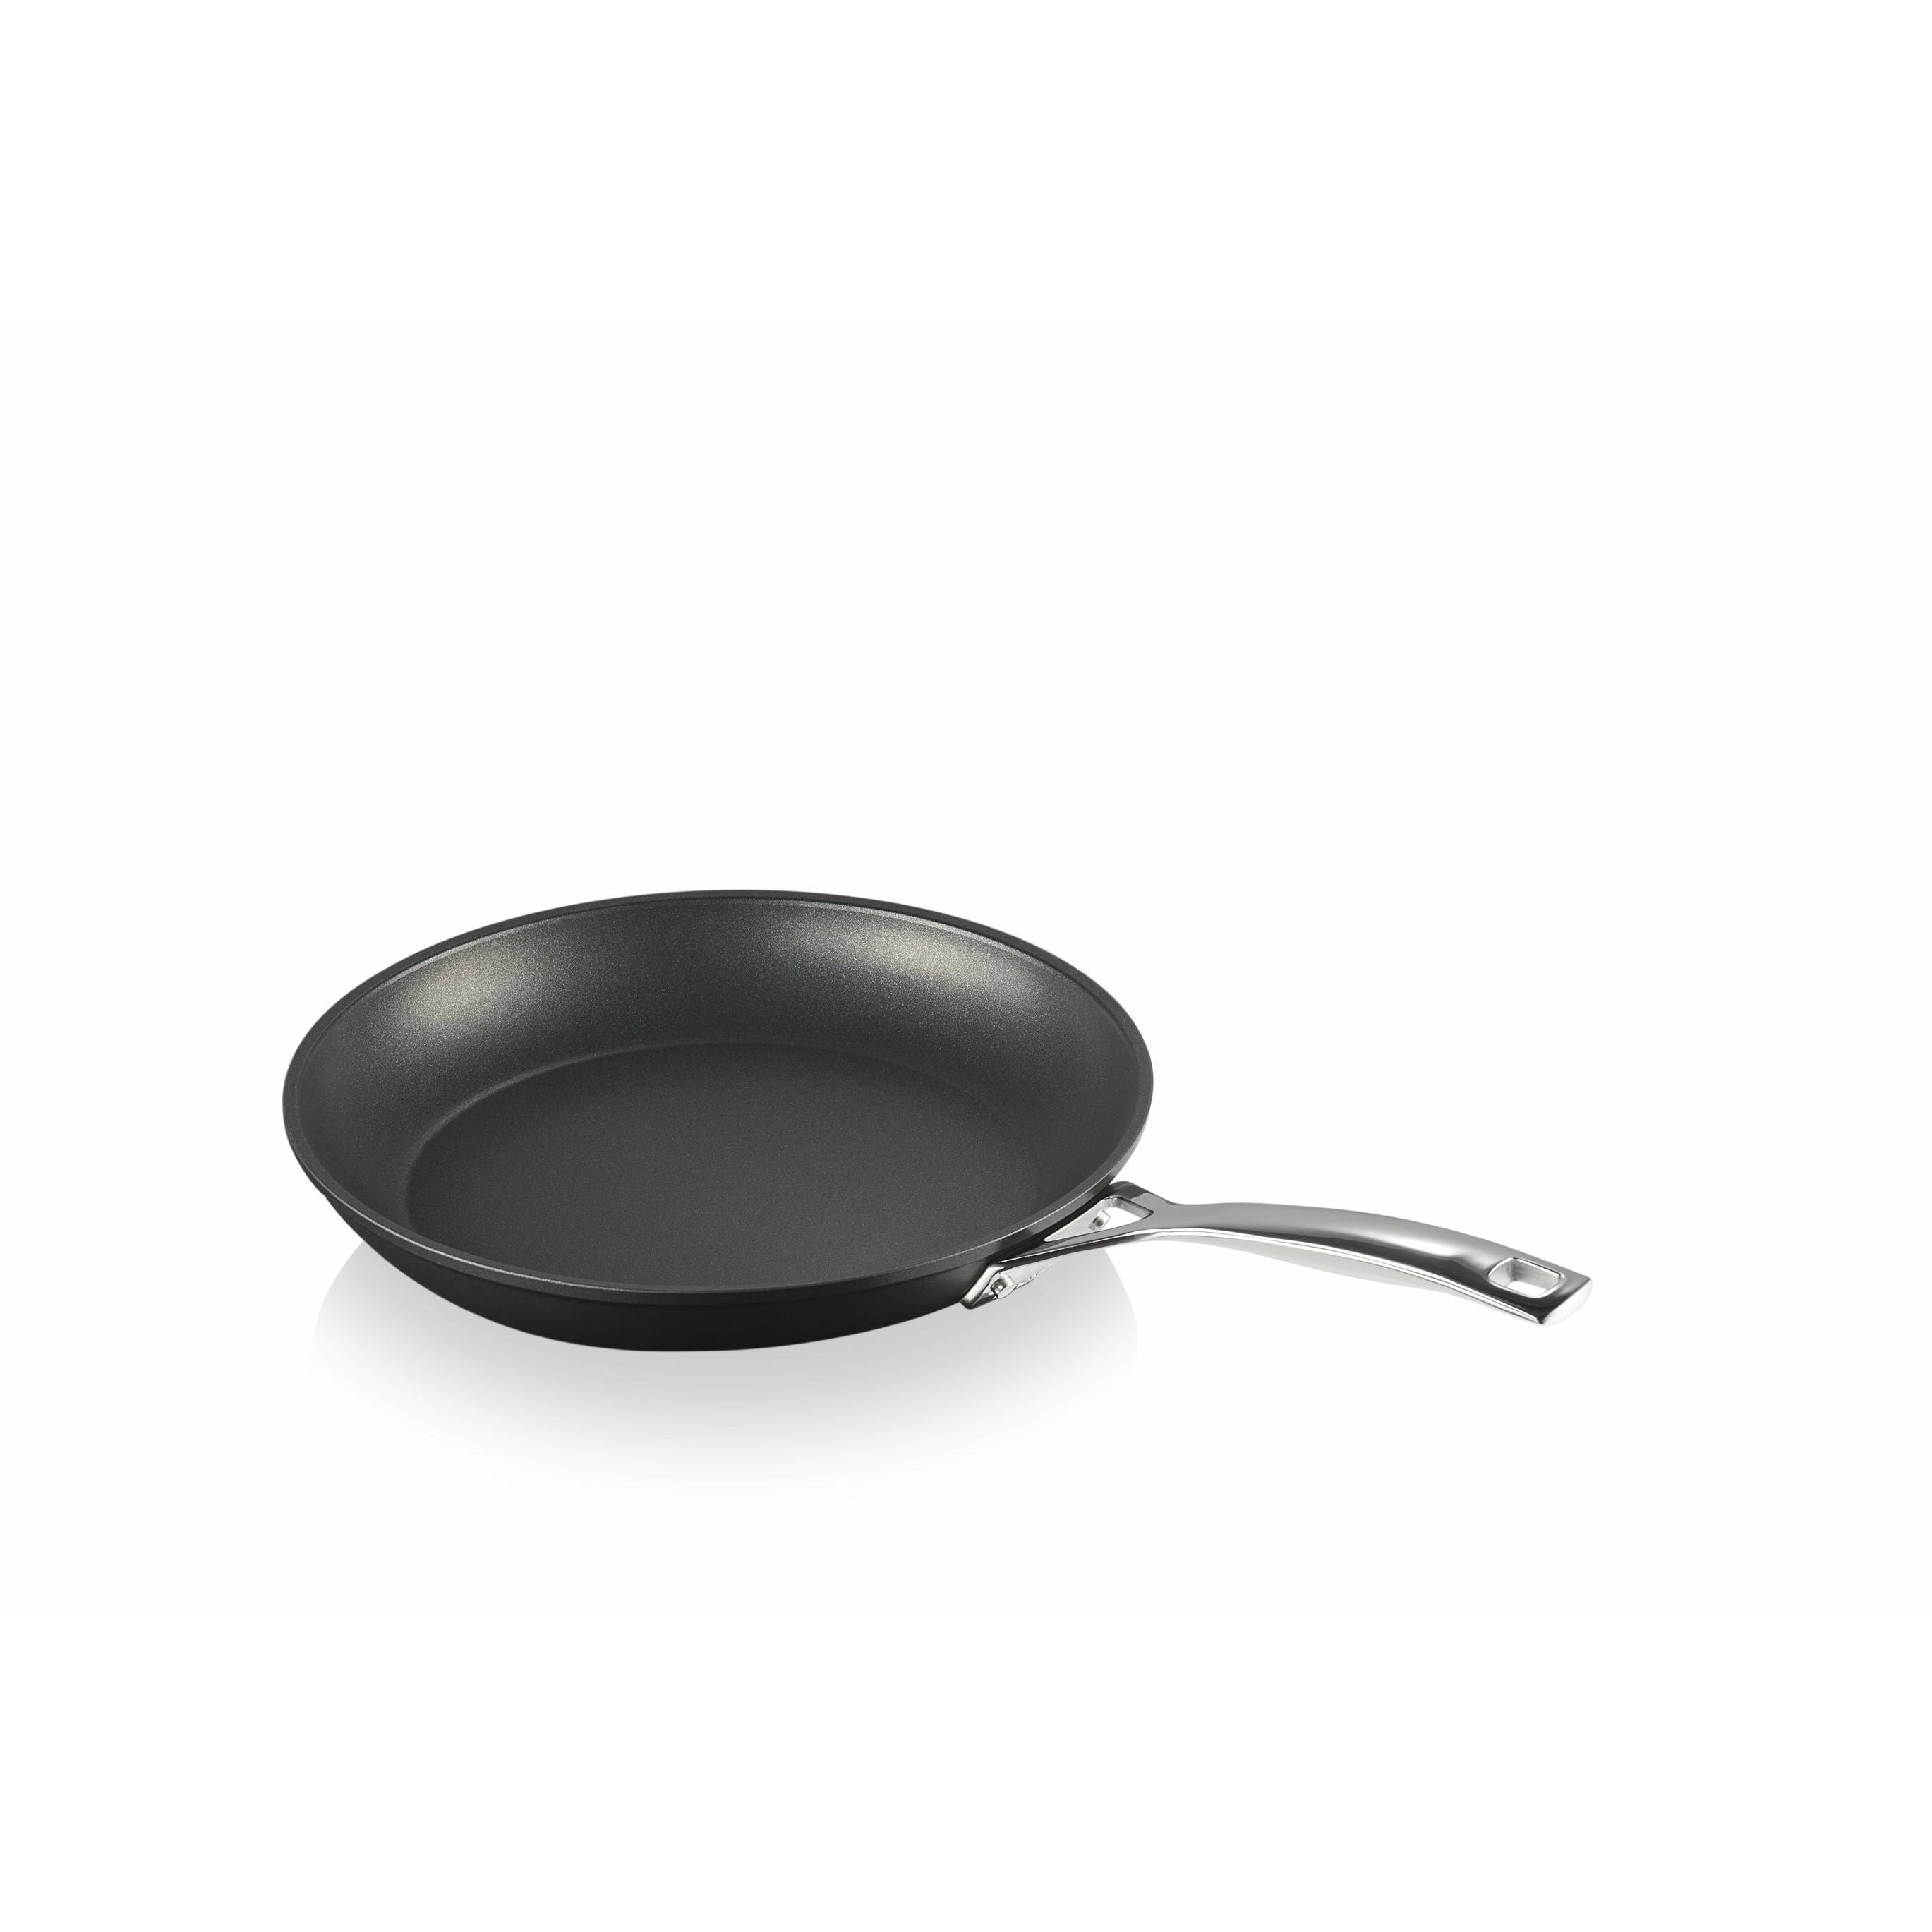 Le Creuset Aluminium Non Stick Flat Pan, 28 Cm